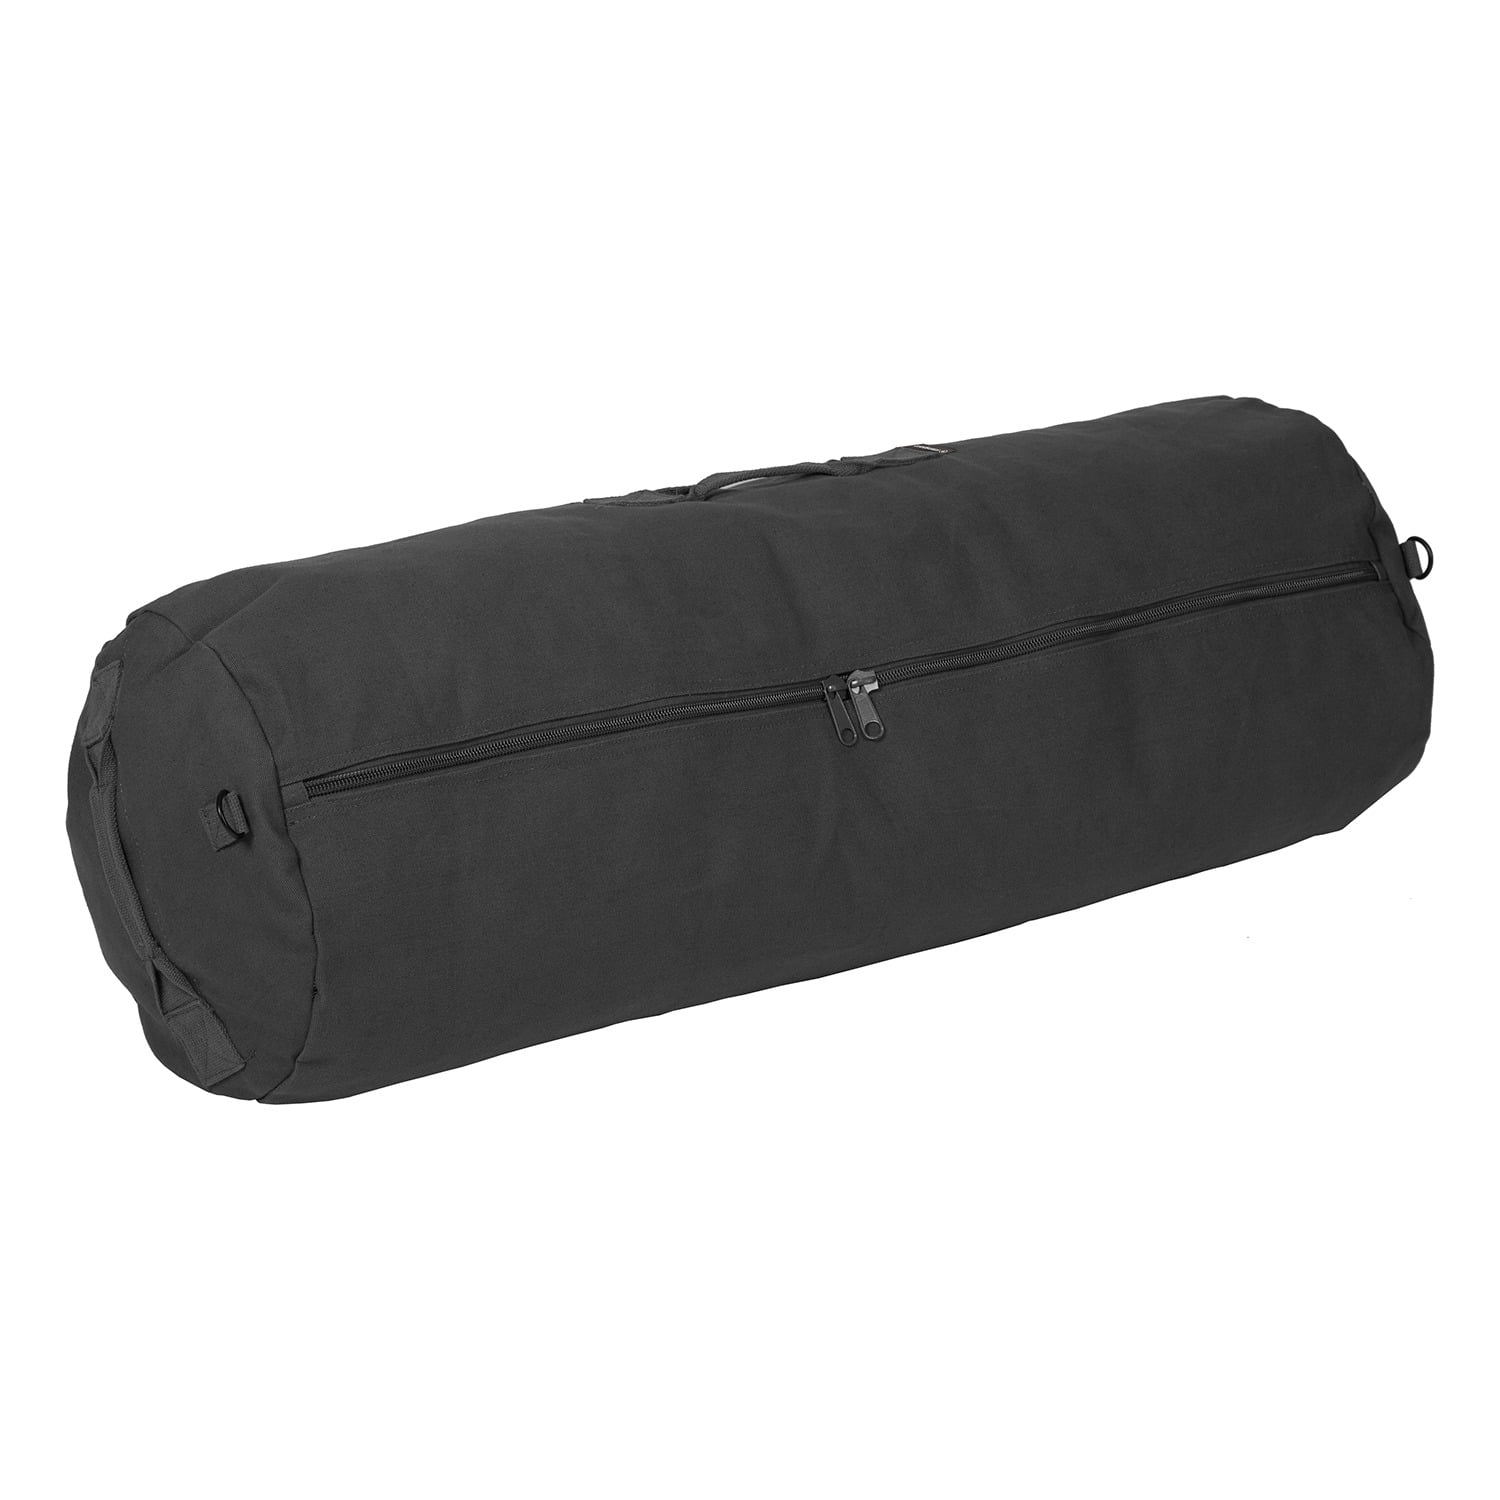 Everest Unisex Basic Gear Bag - X Large Black - Walmart.com